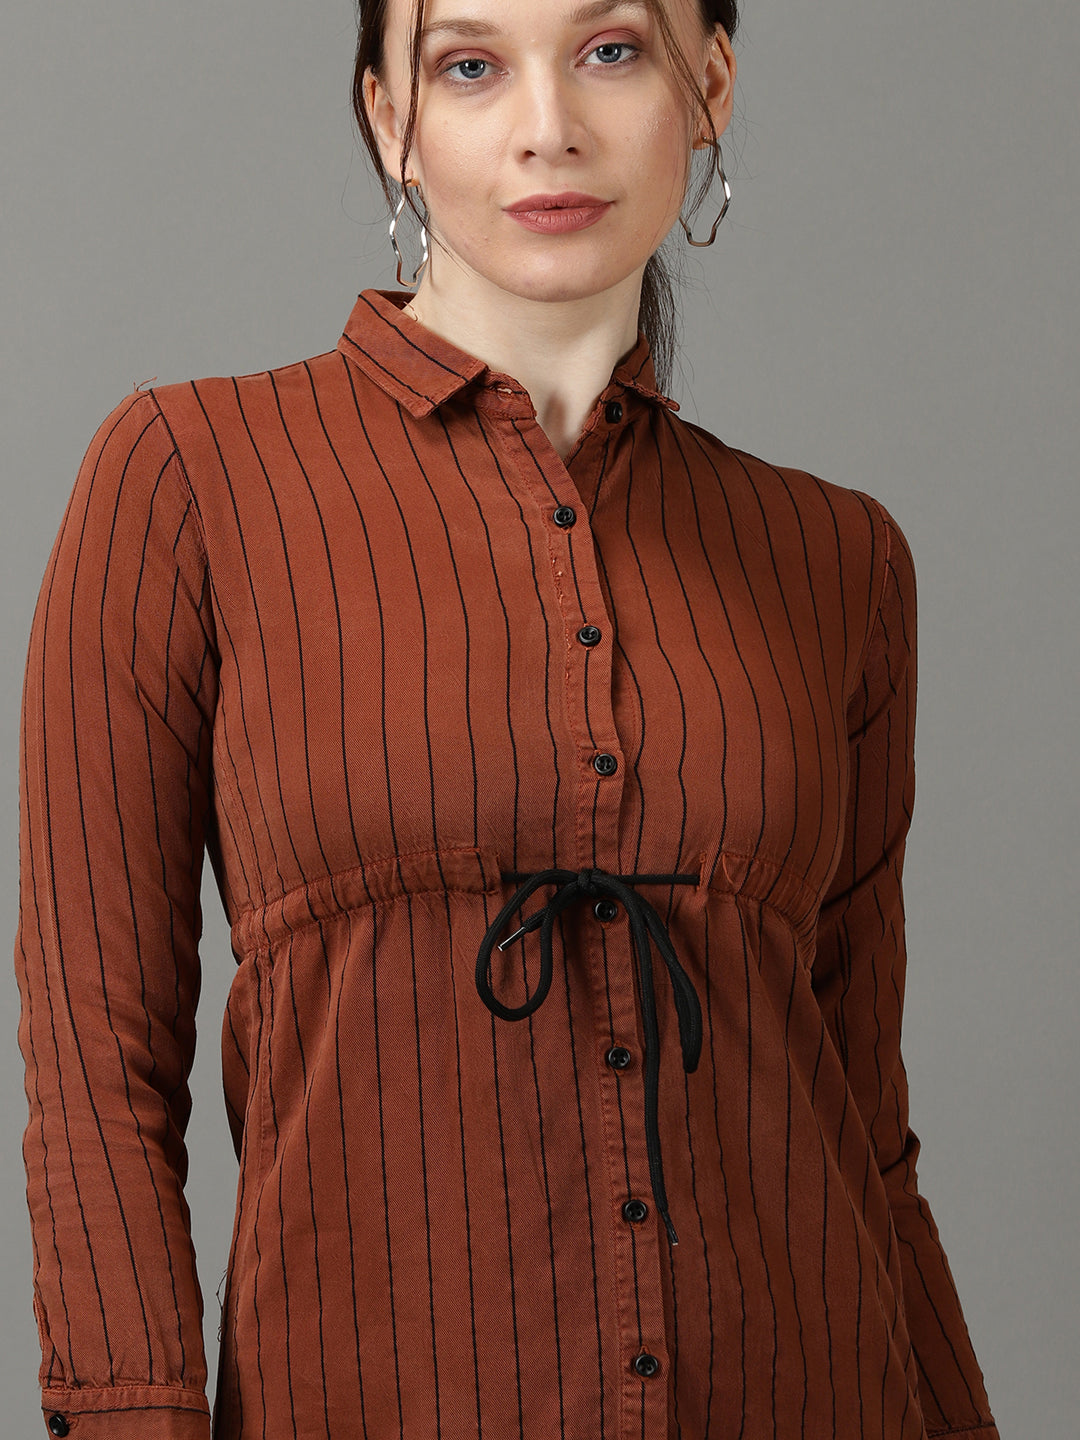 Women's Brown Striped Shirt Style Longline Top